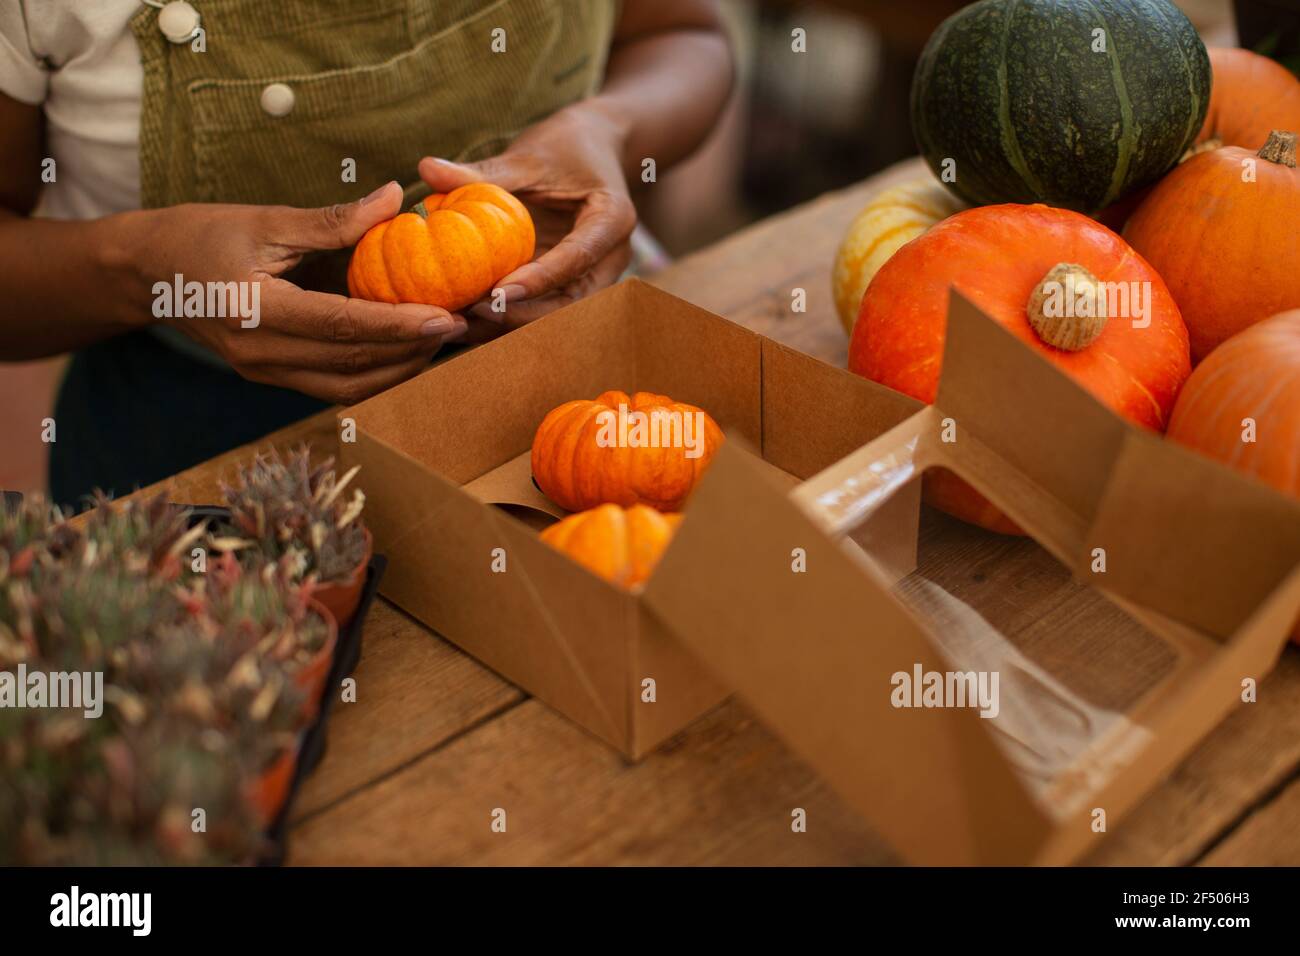 Woman boxing bright orange pumpkins in shop Stock Photo